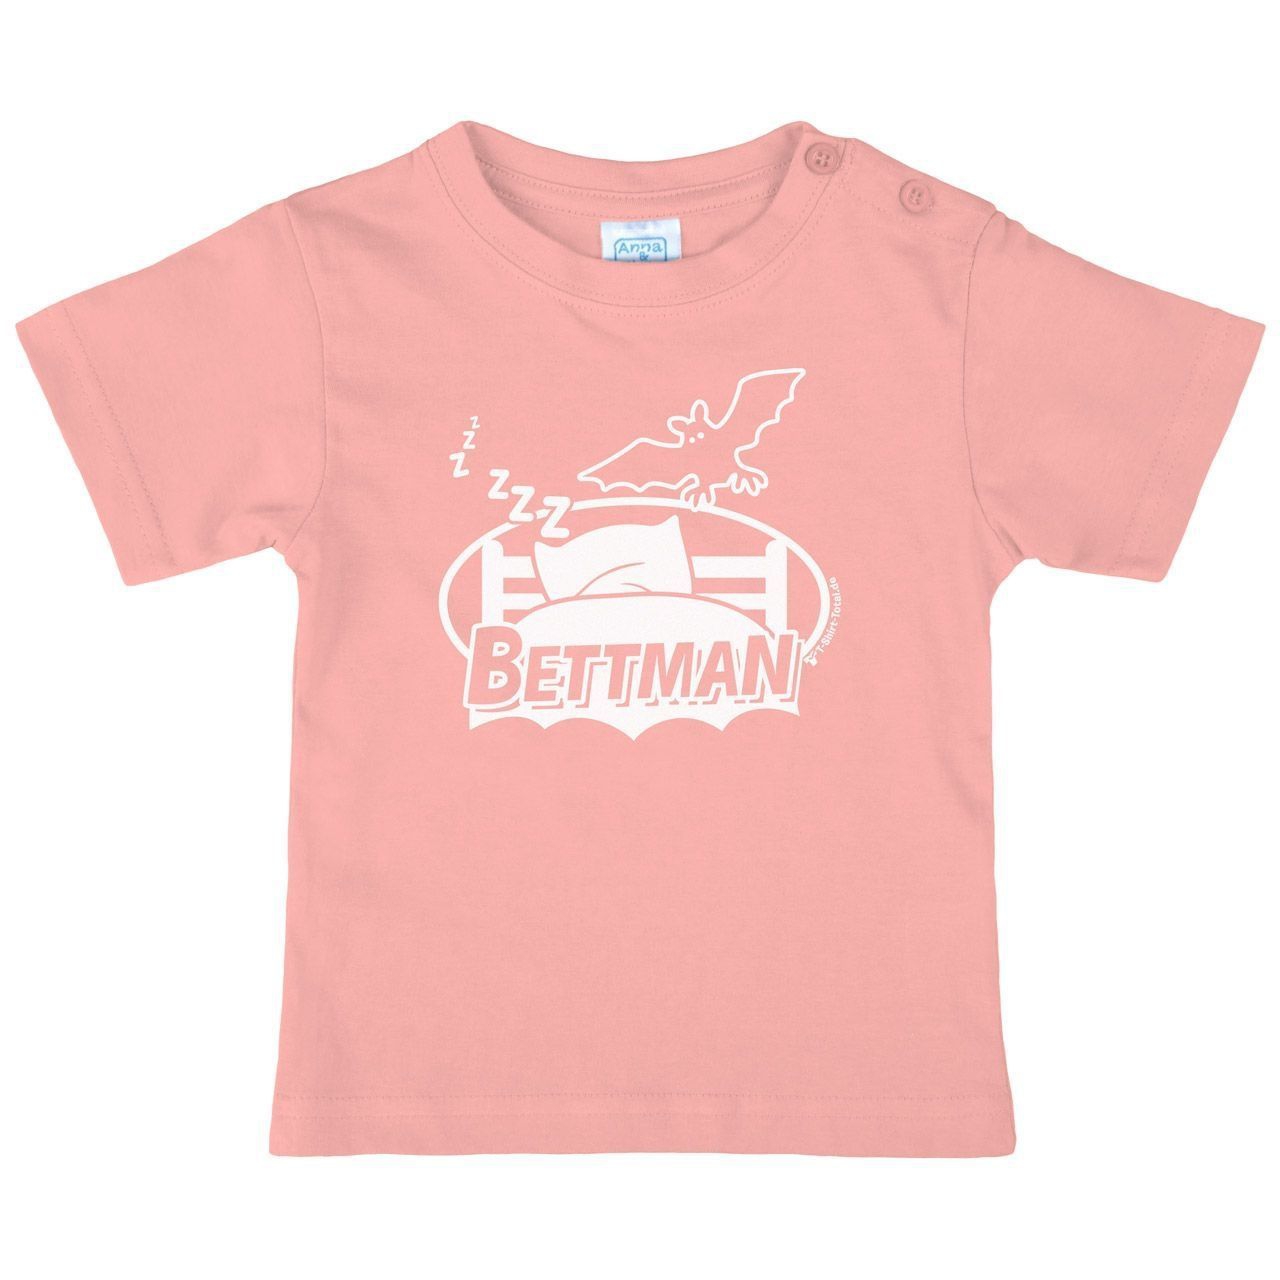 Bettman Kinder T-Shirt rosa 56 / 62